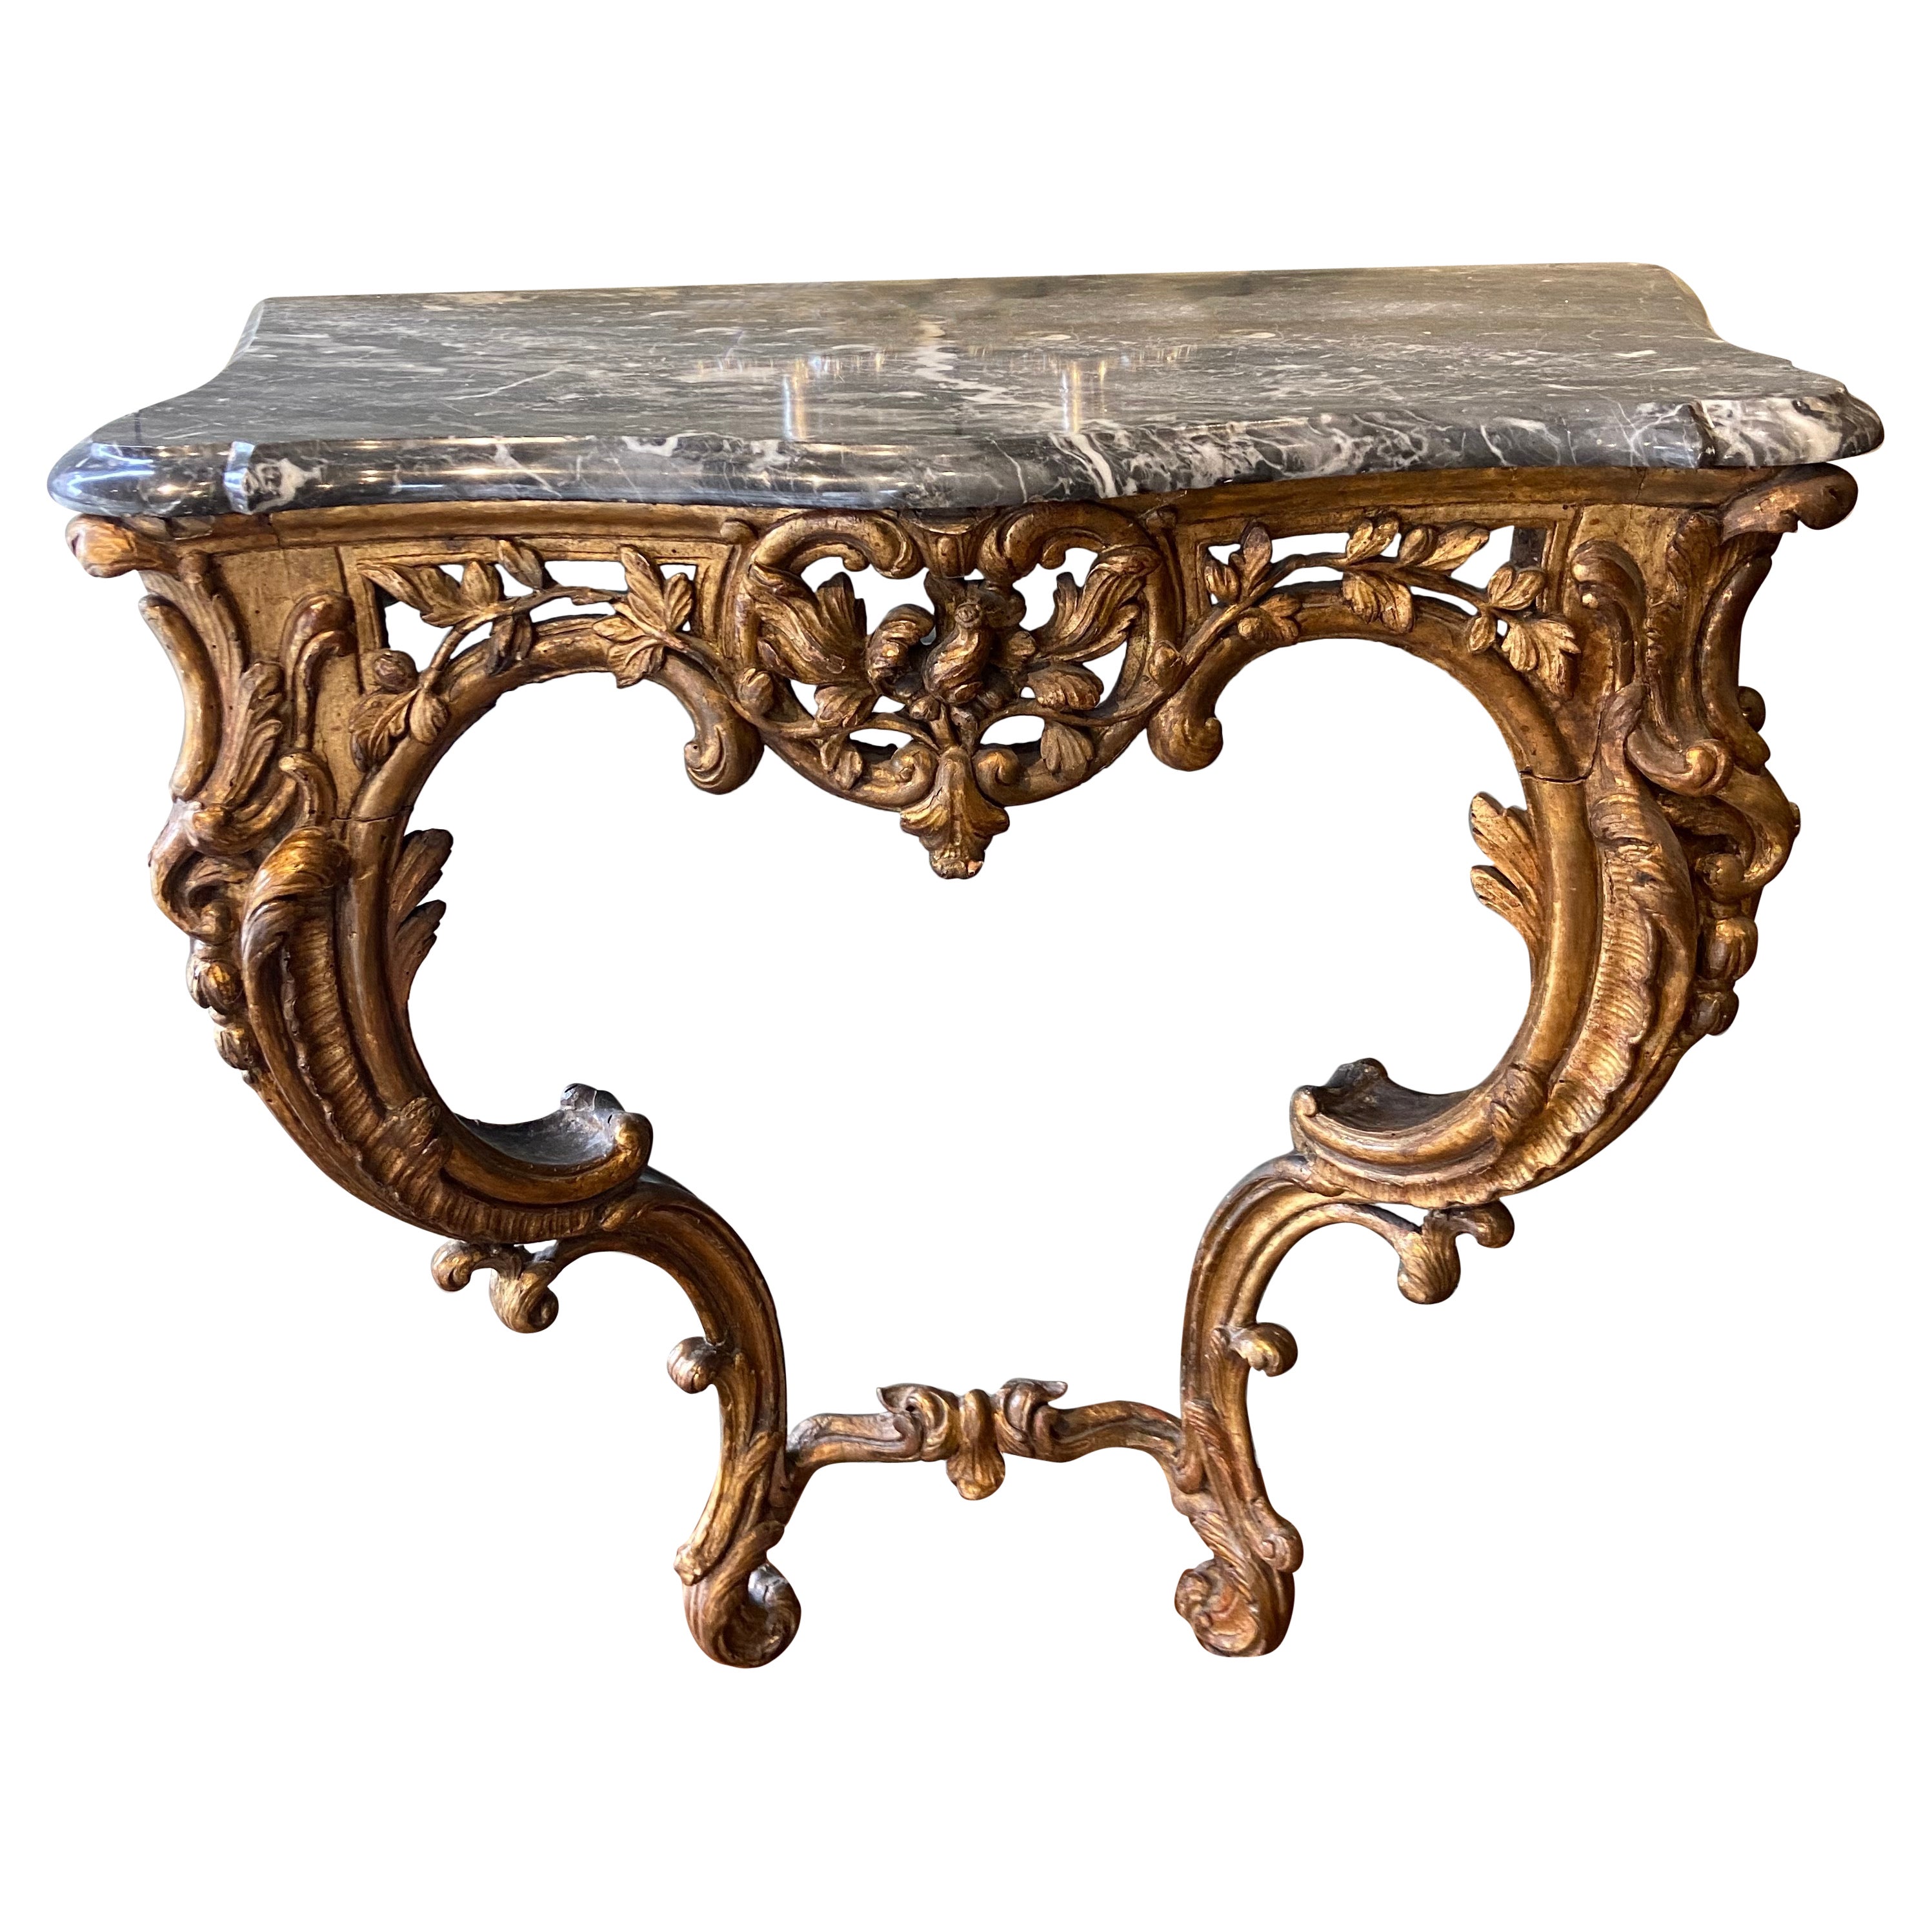 Italian Gilt-Wood Serpentine Console Table 'Mid 18th Century'